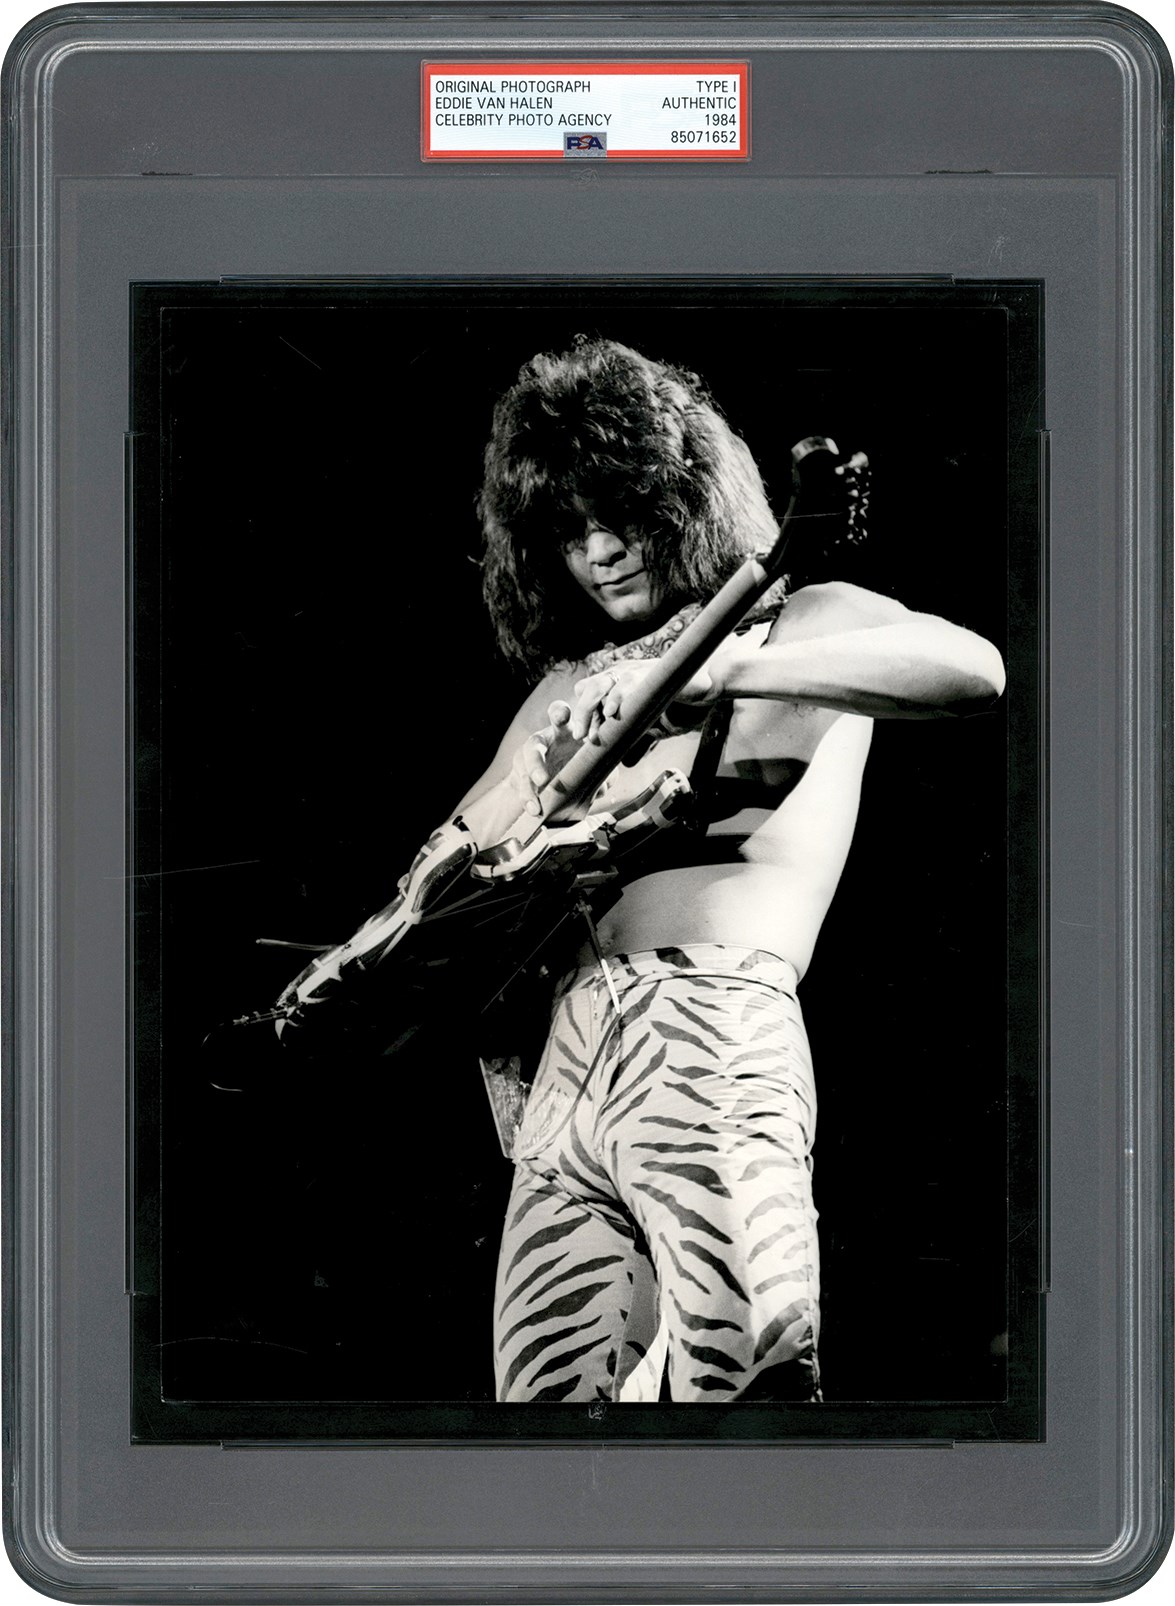 - 1984 Eddie Van Halen "Eruption Solo" Original Photograph (PSA Type I)